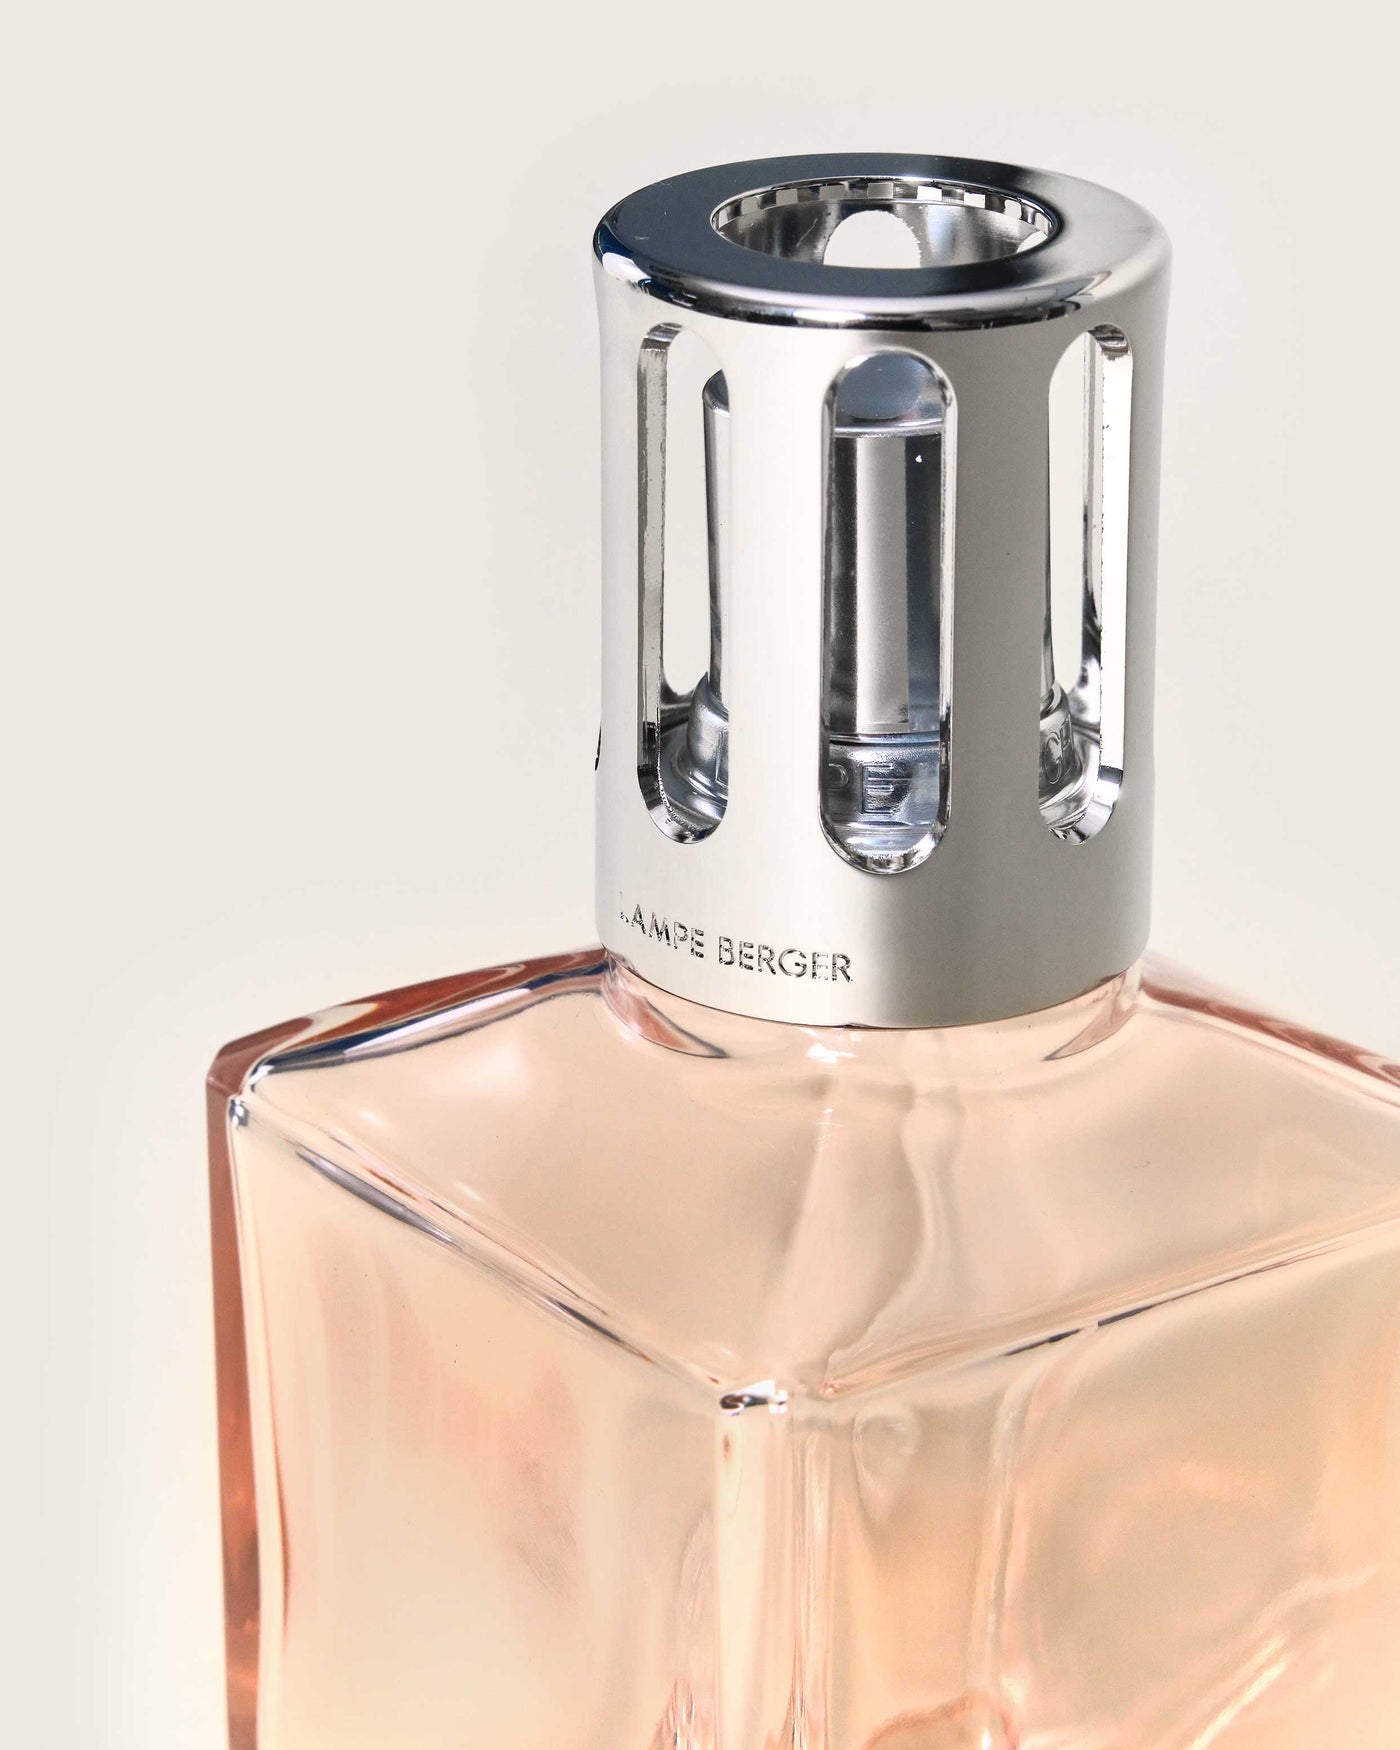 MAISON BERGER - Lampe Berger Model Facette - Difusor de lámpara de  fragancia para el hogar - 5.9 x 3.9 x 3.9 pulgadas - Incluye caricia de  algodón